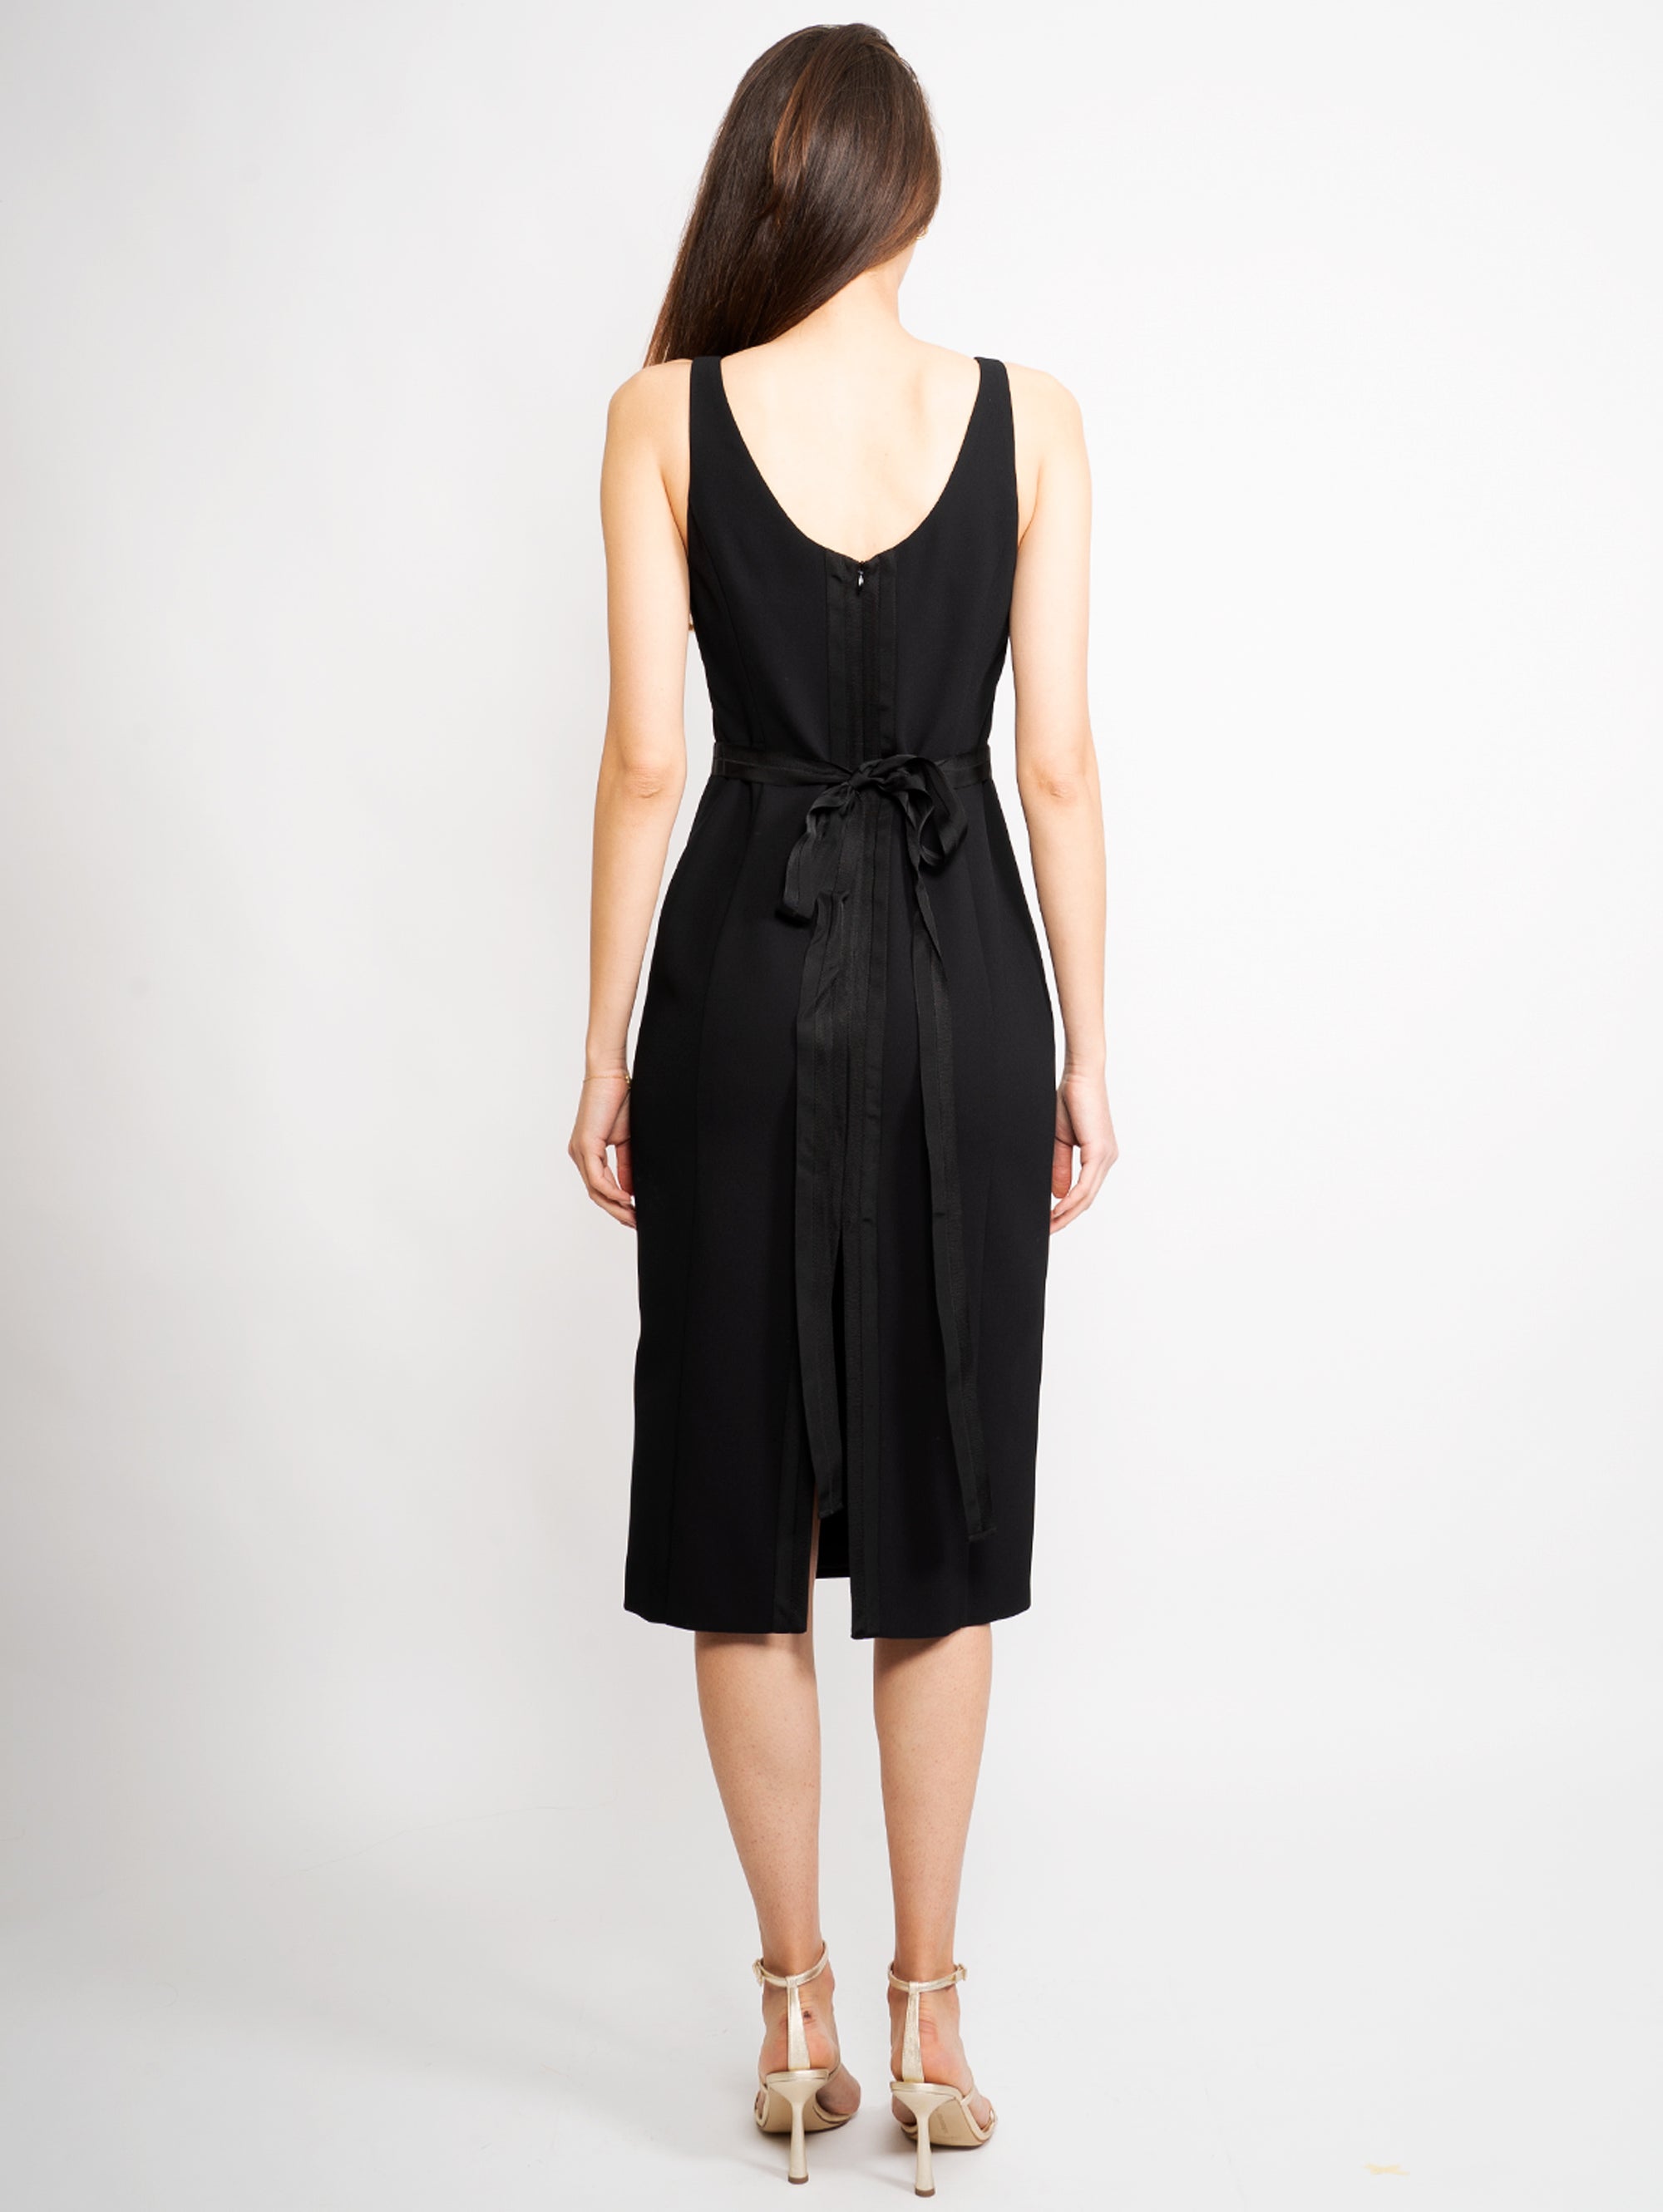 Longuette Black Sheath Dress